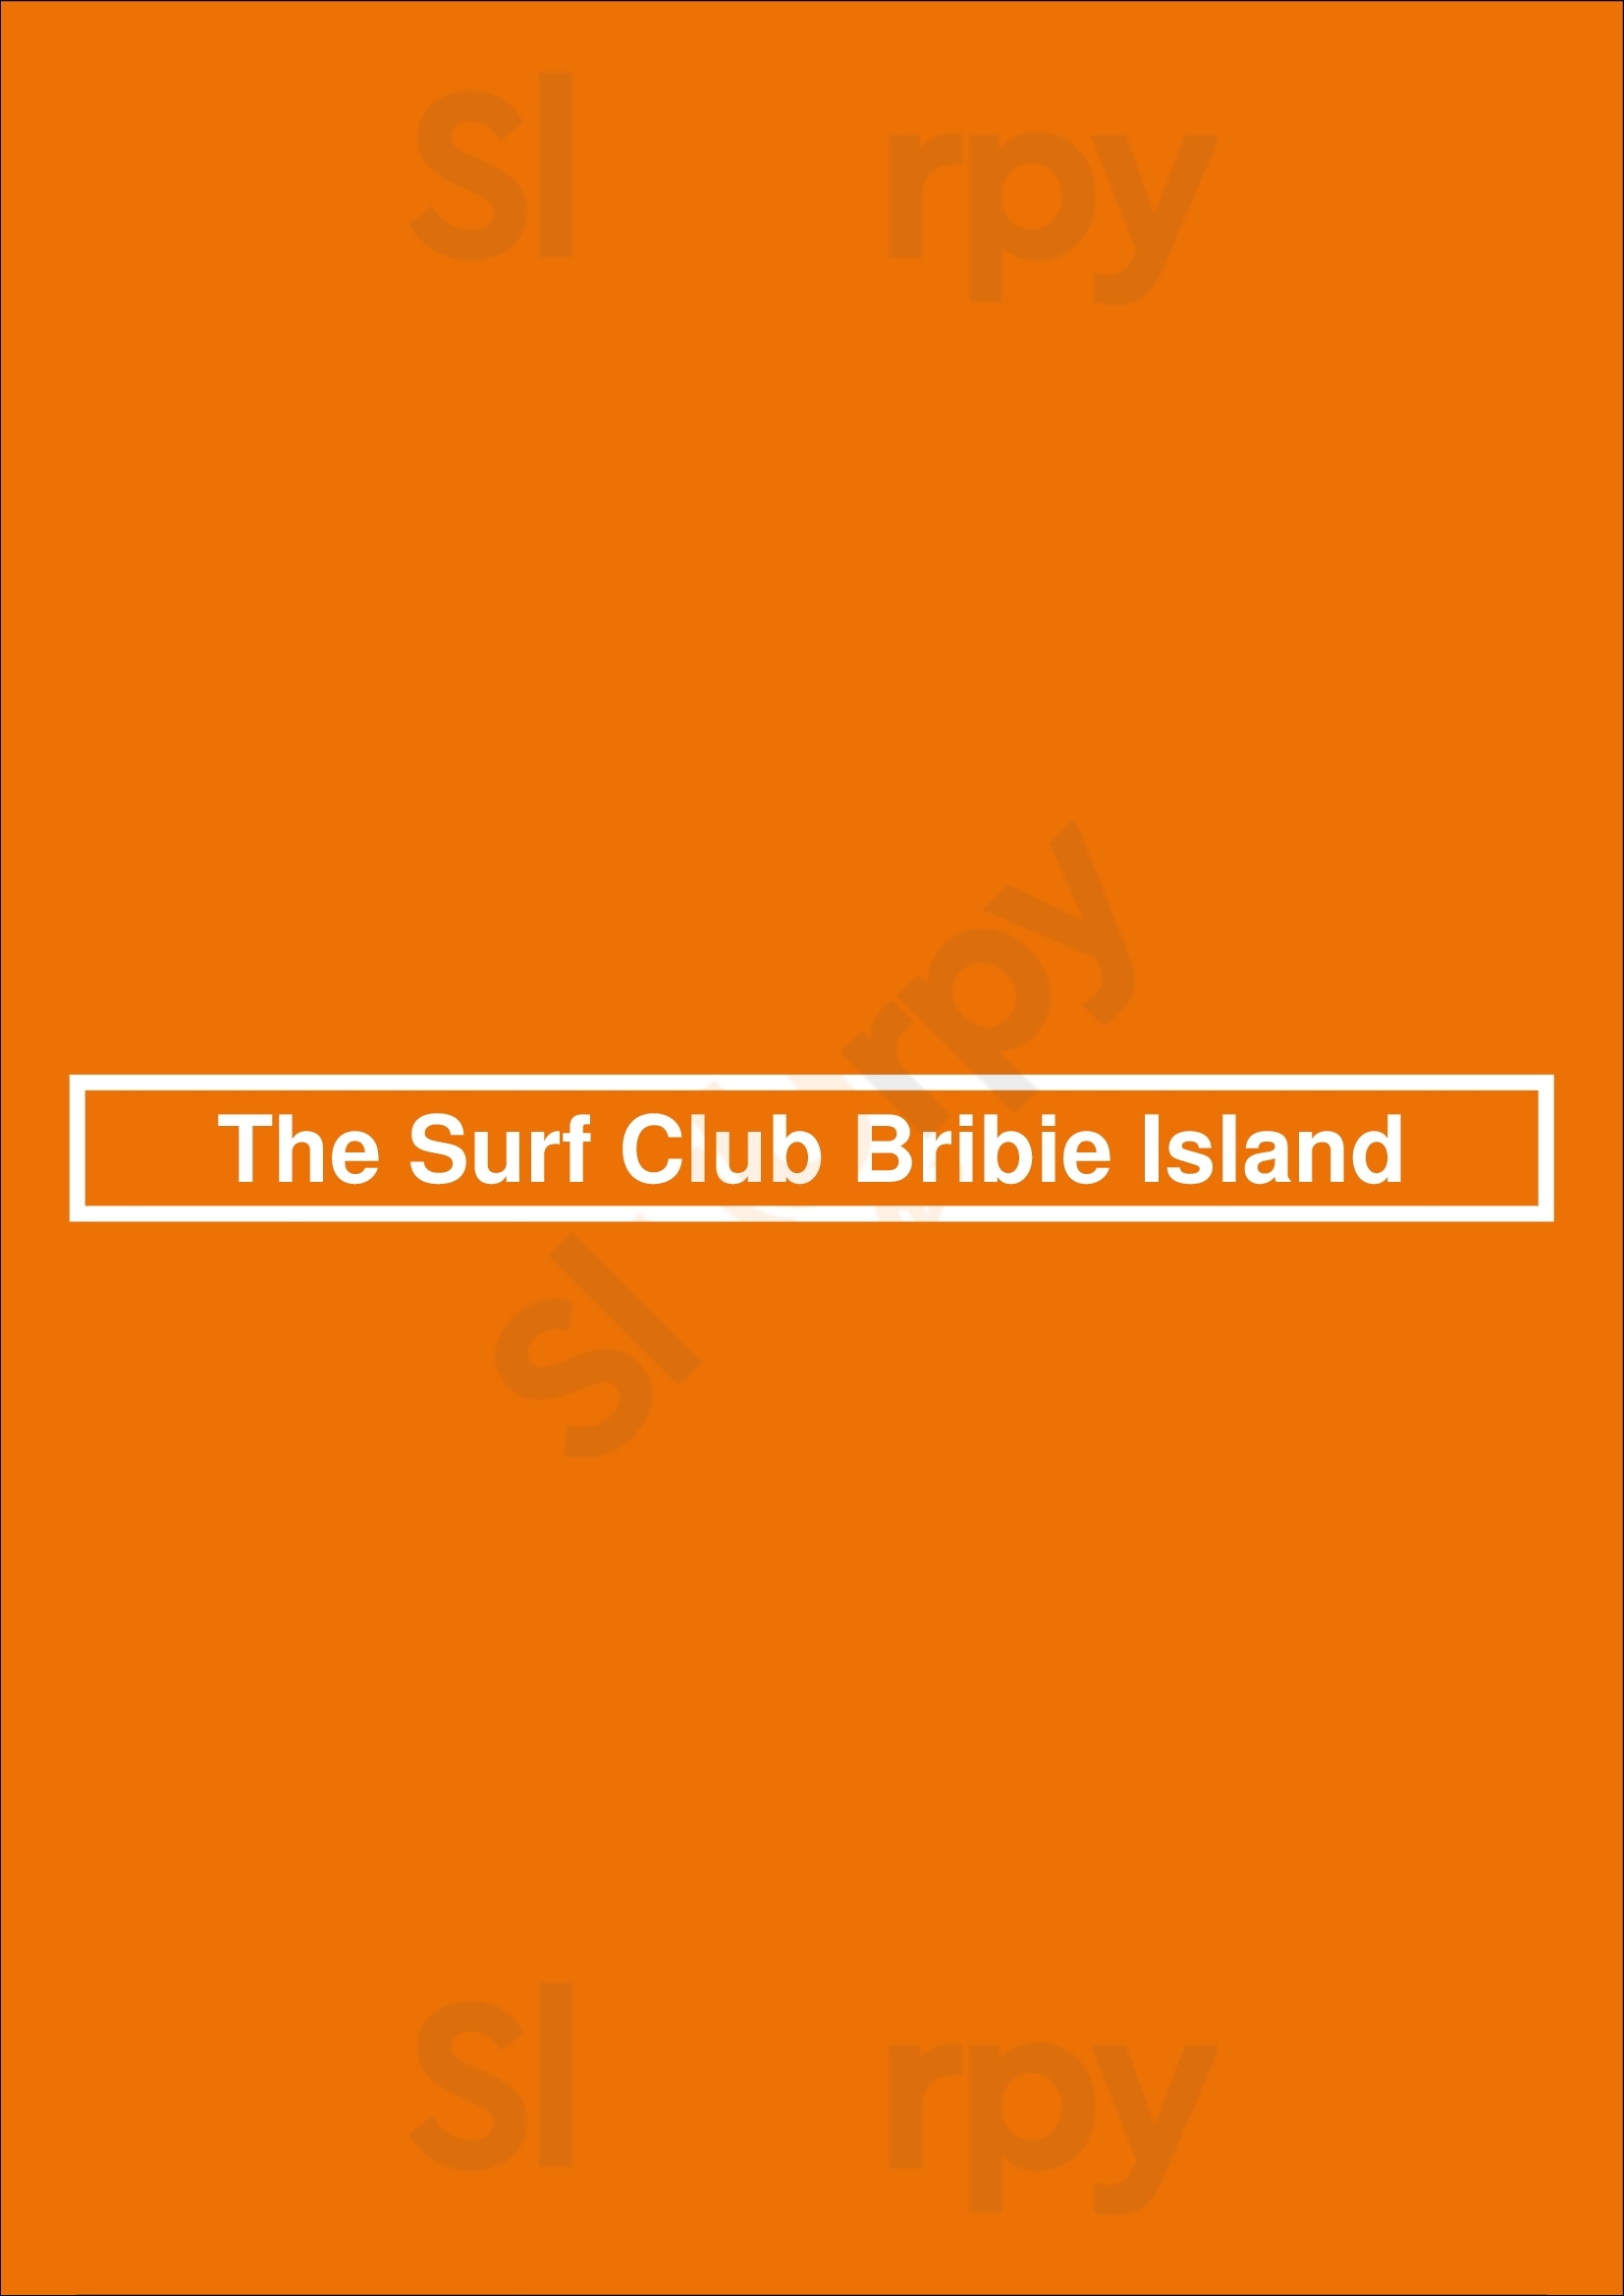 The Surf Club Bribie Island Woorim Menu - 1